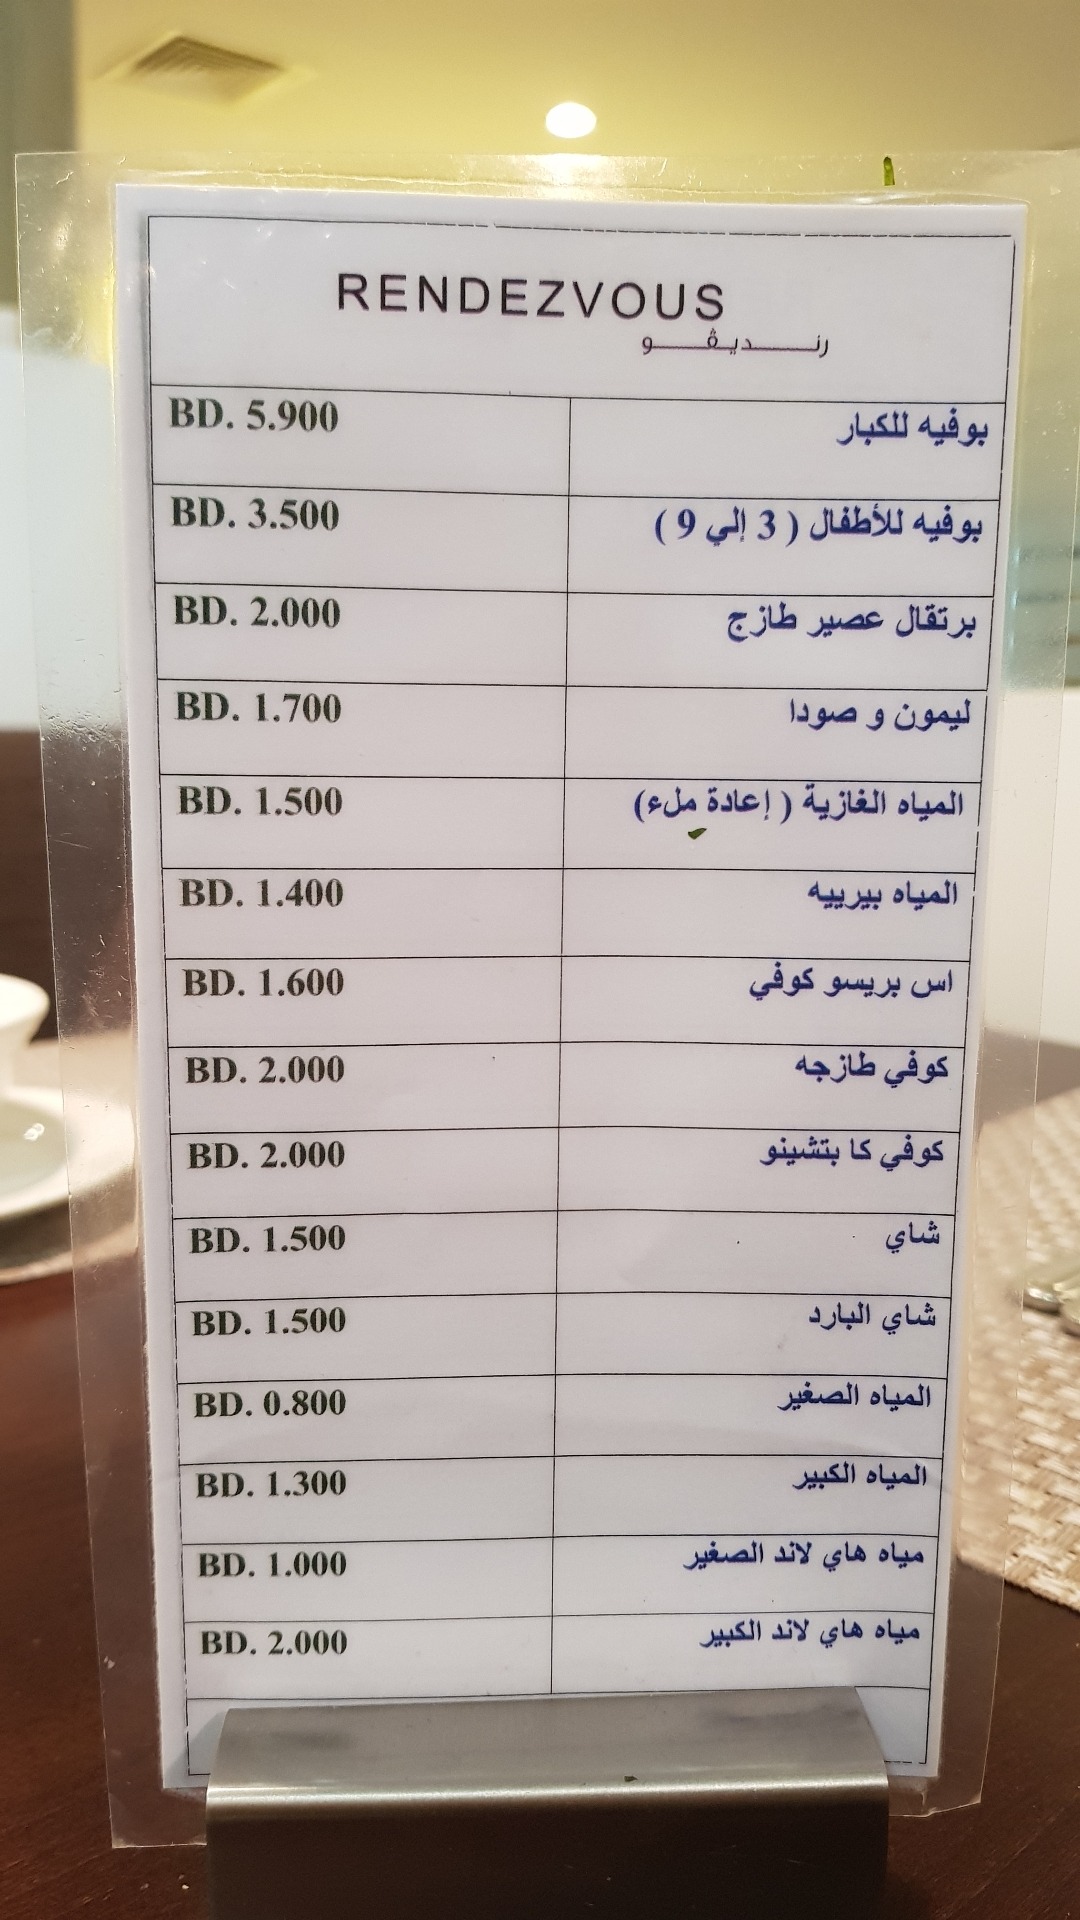 Lunch menu @ Rendezvous Restaurant - Bahrain